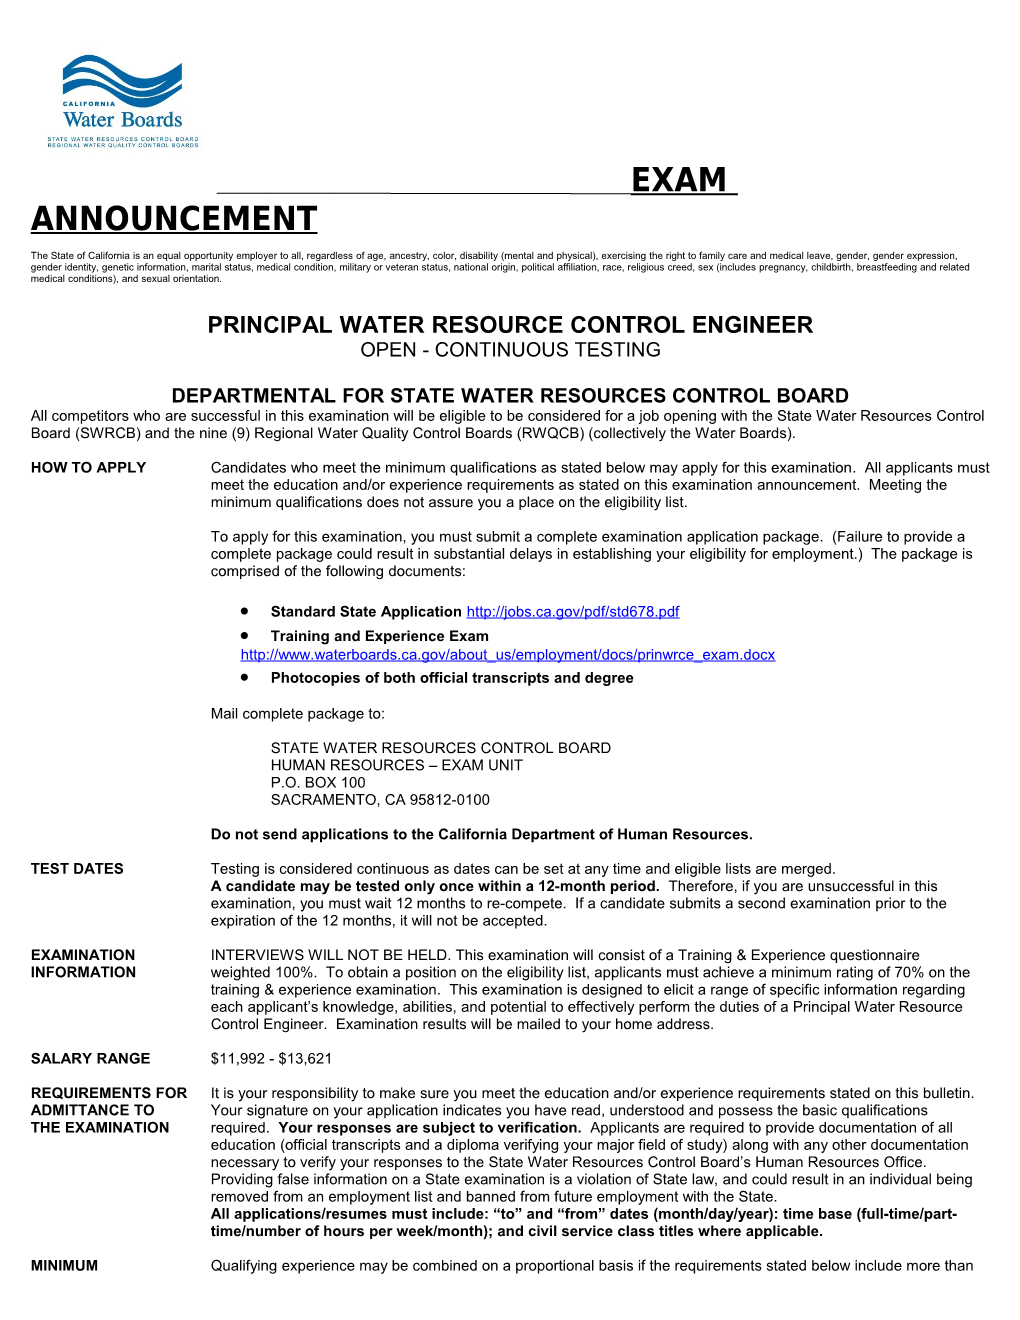 Principal Water Resource Control Engineer